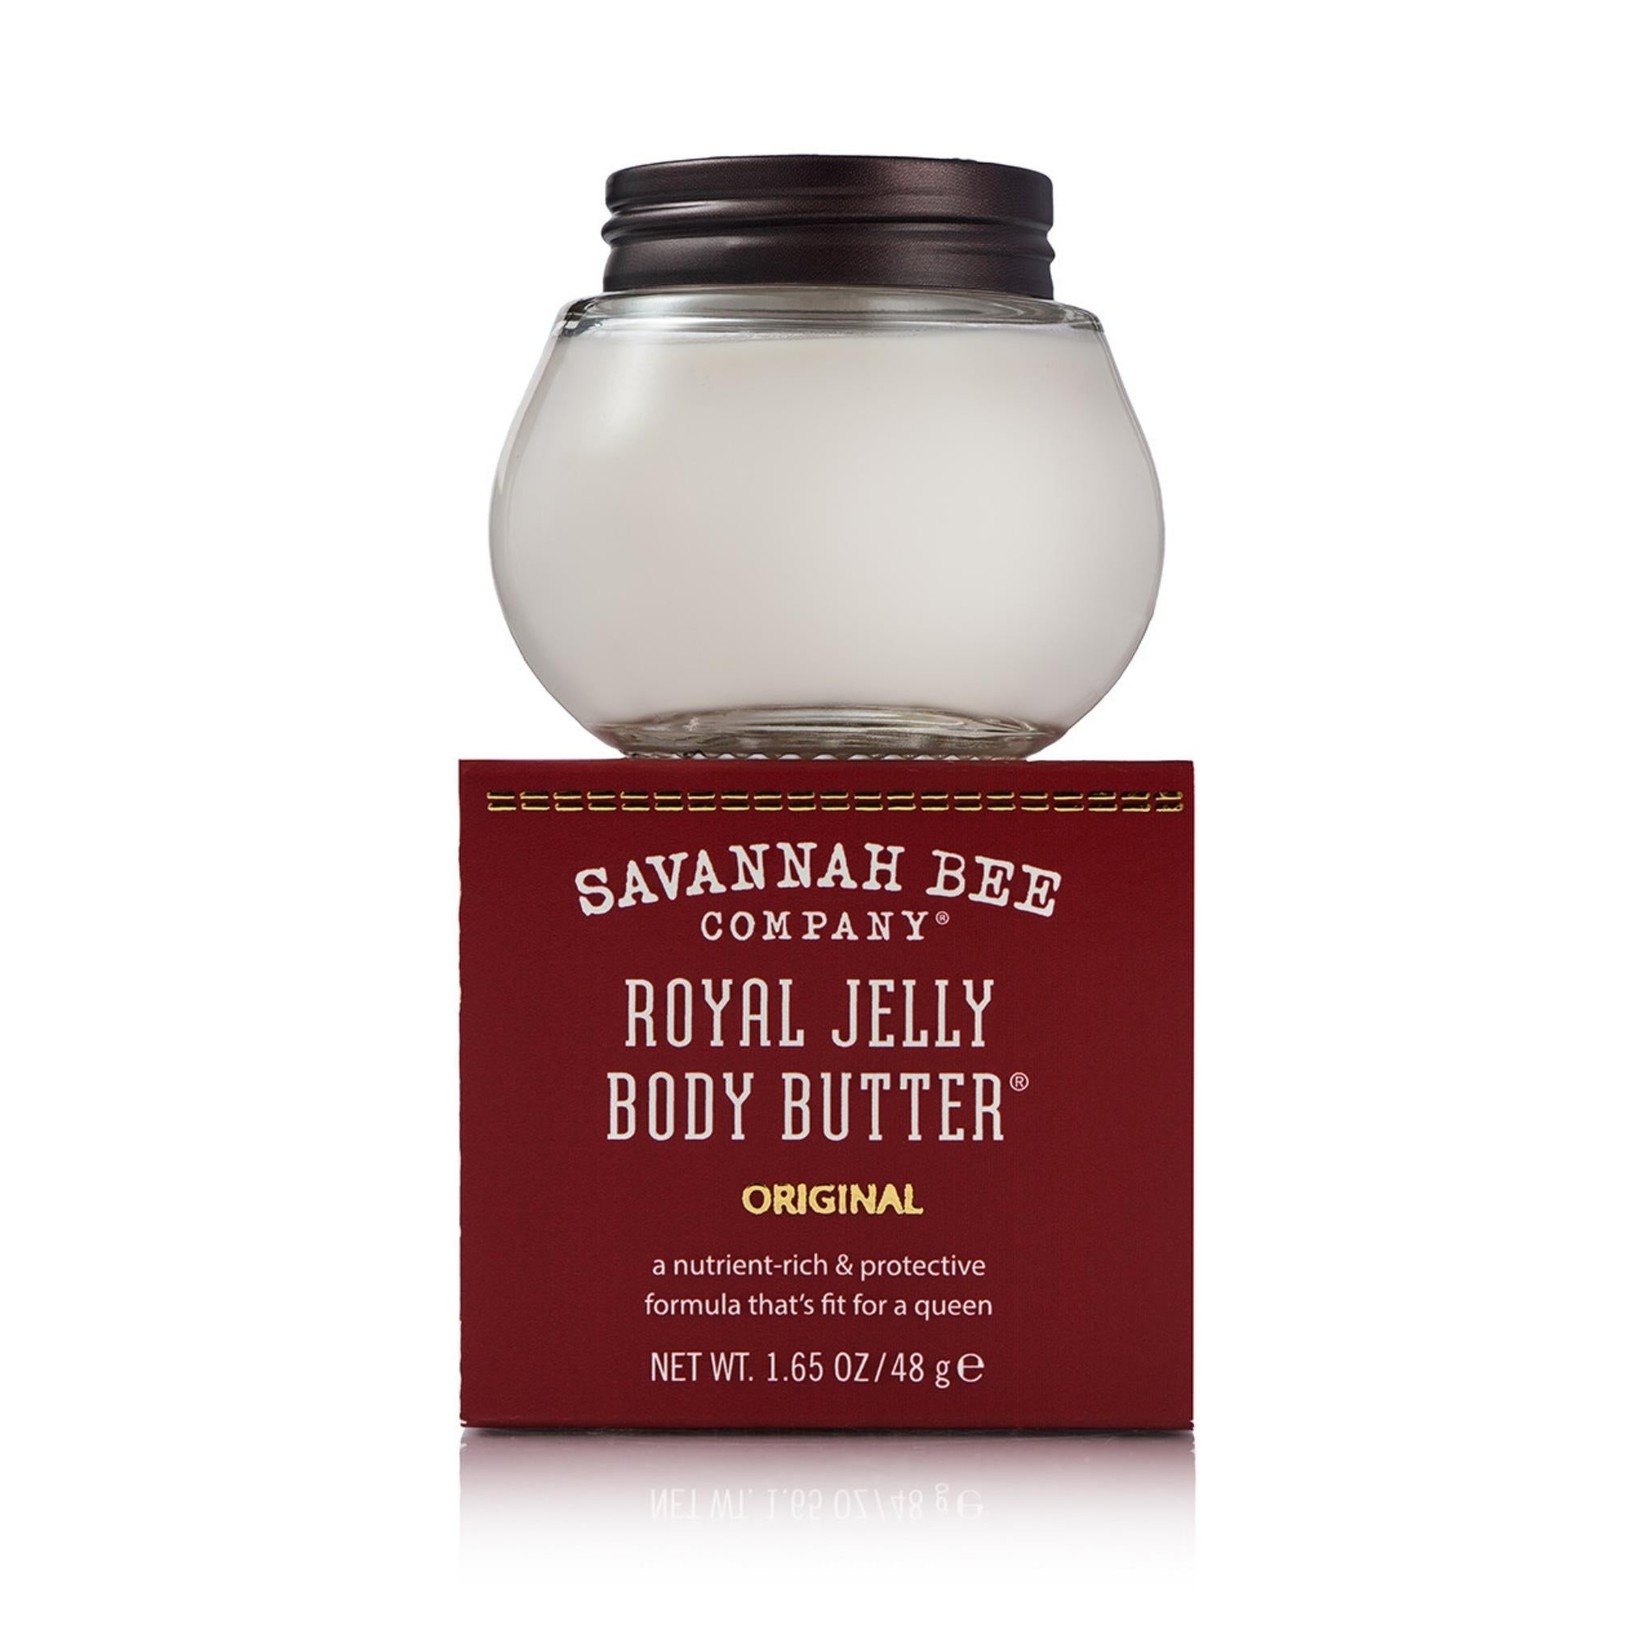 Savannah Bee - Royal Jelly Body Butter - Original Mini